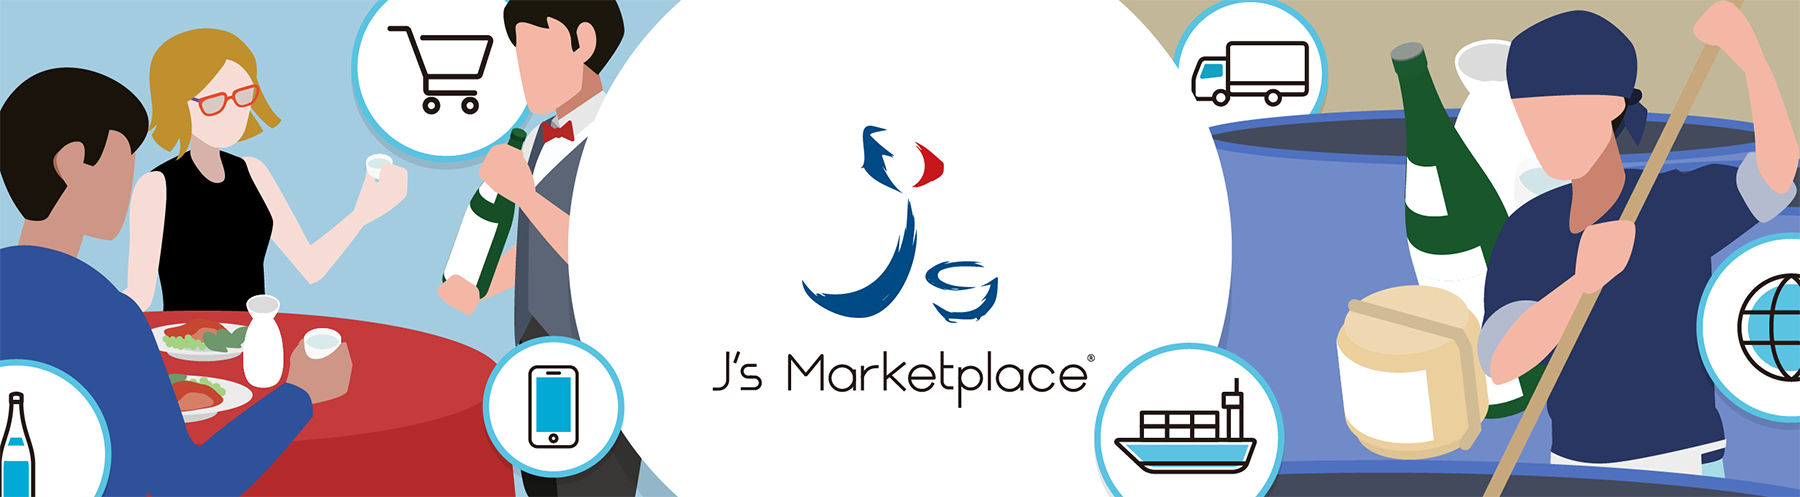 DXで日本酒の輸出拡大を加速させる  J's Marketplace